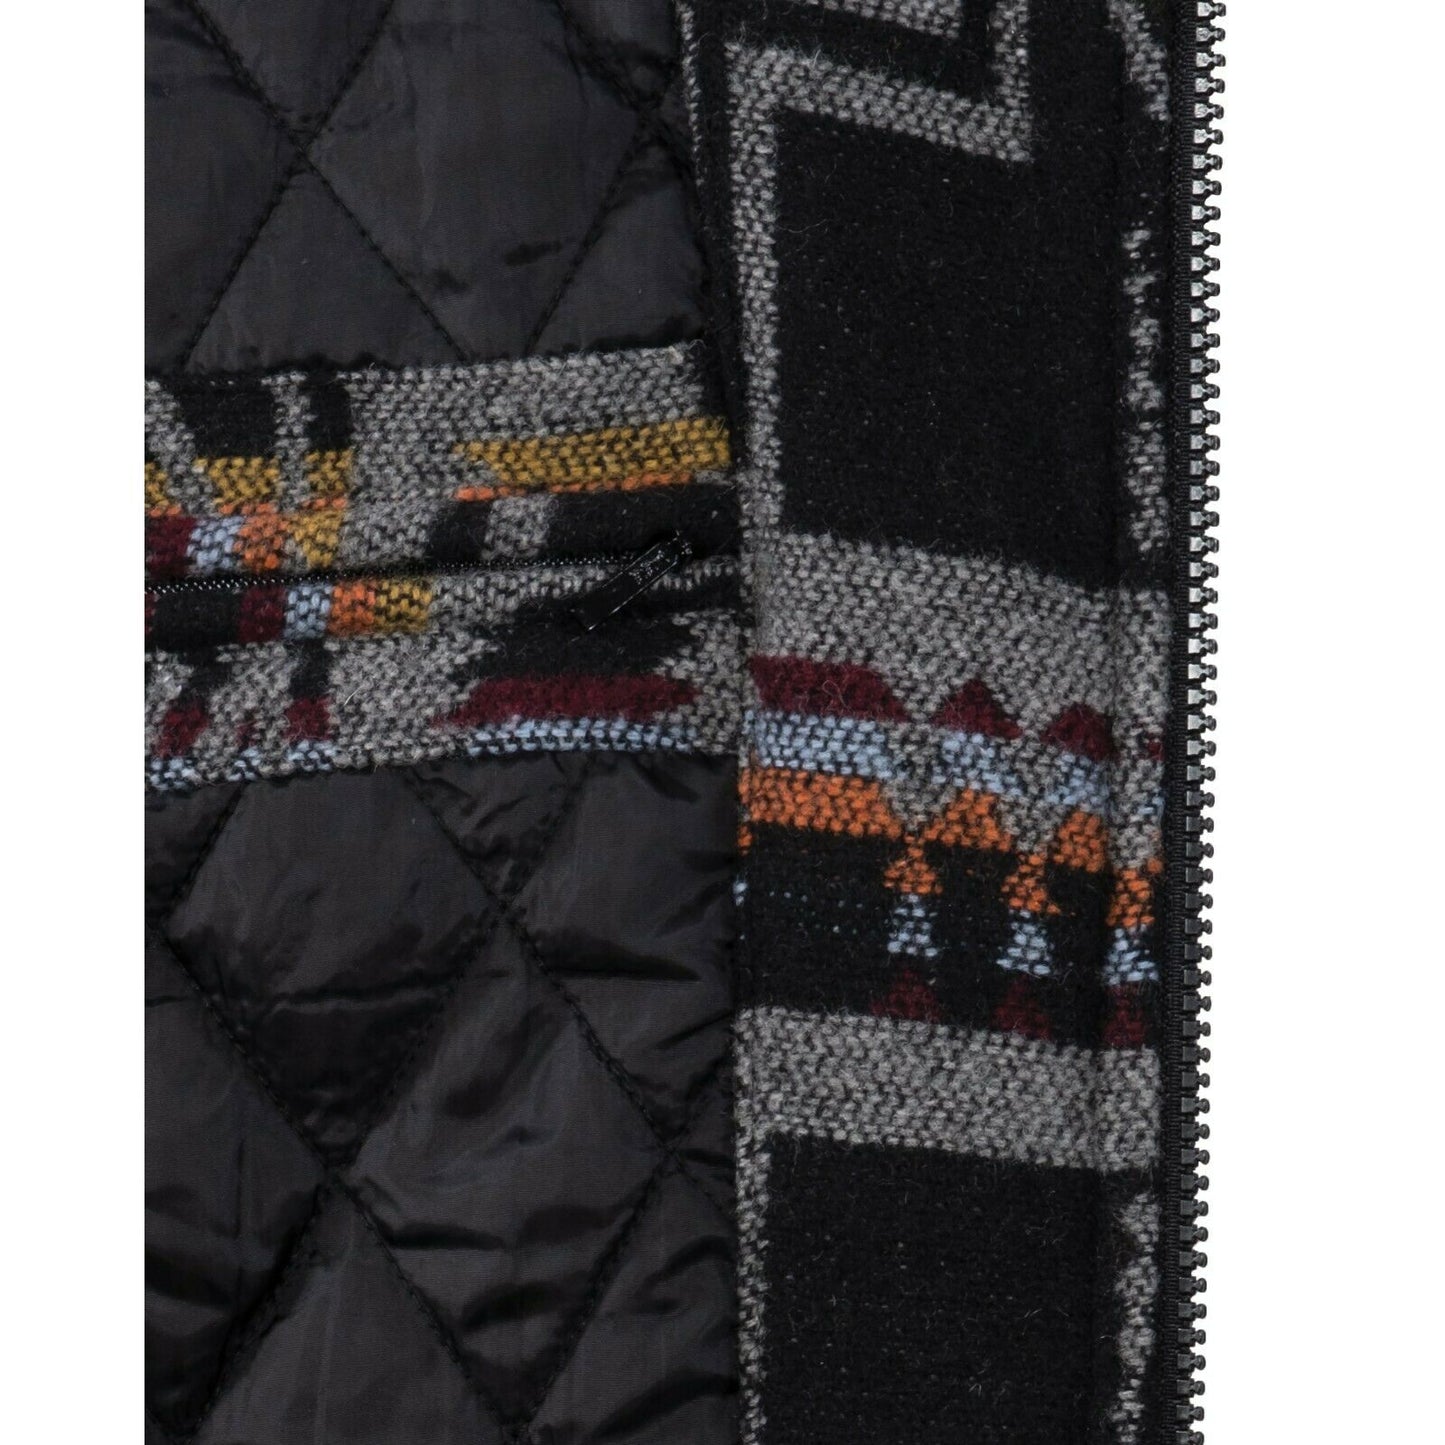 Outback Trading Company Men's Koda Black Full Zip Jacket 29756-BLK